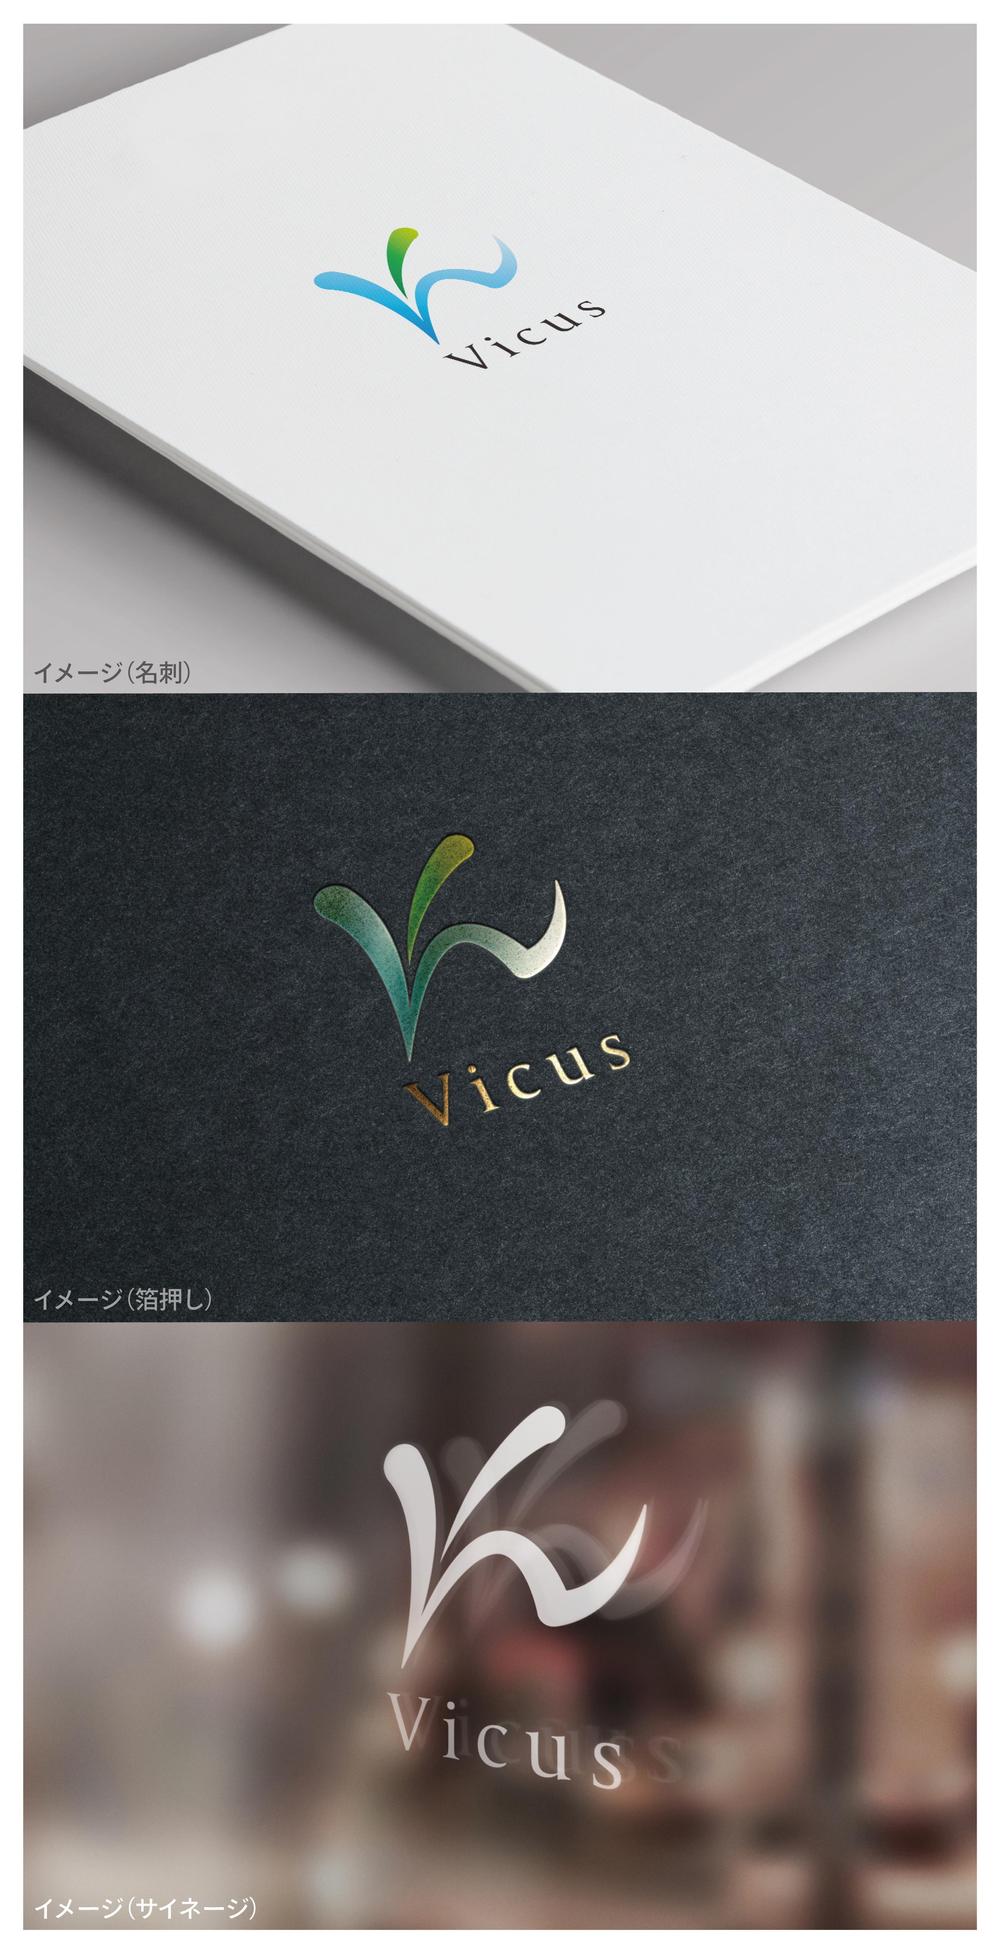 Vicus_logo02_01.jpg